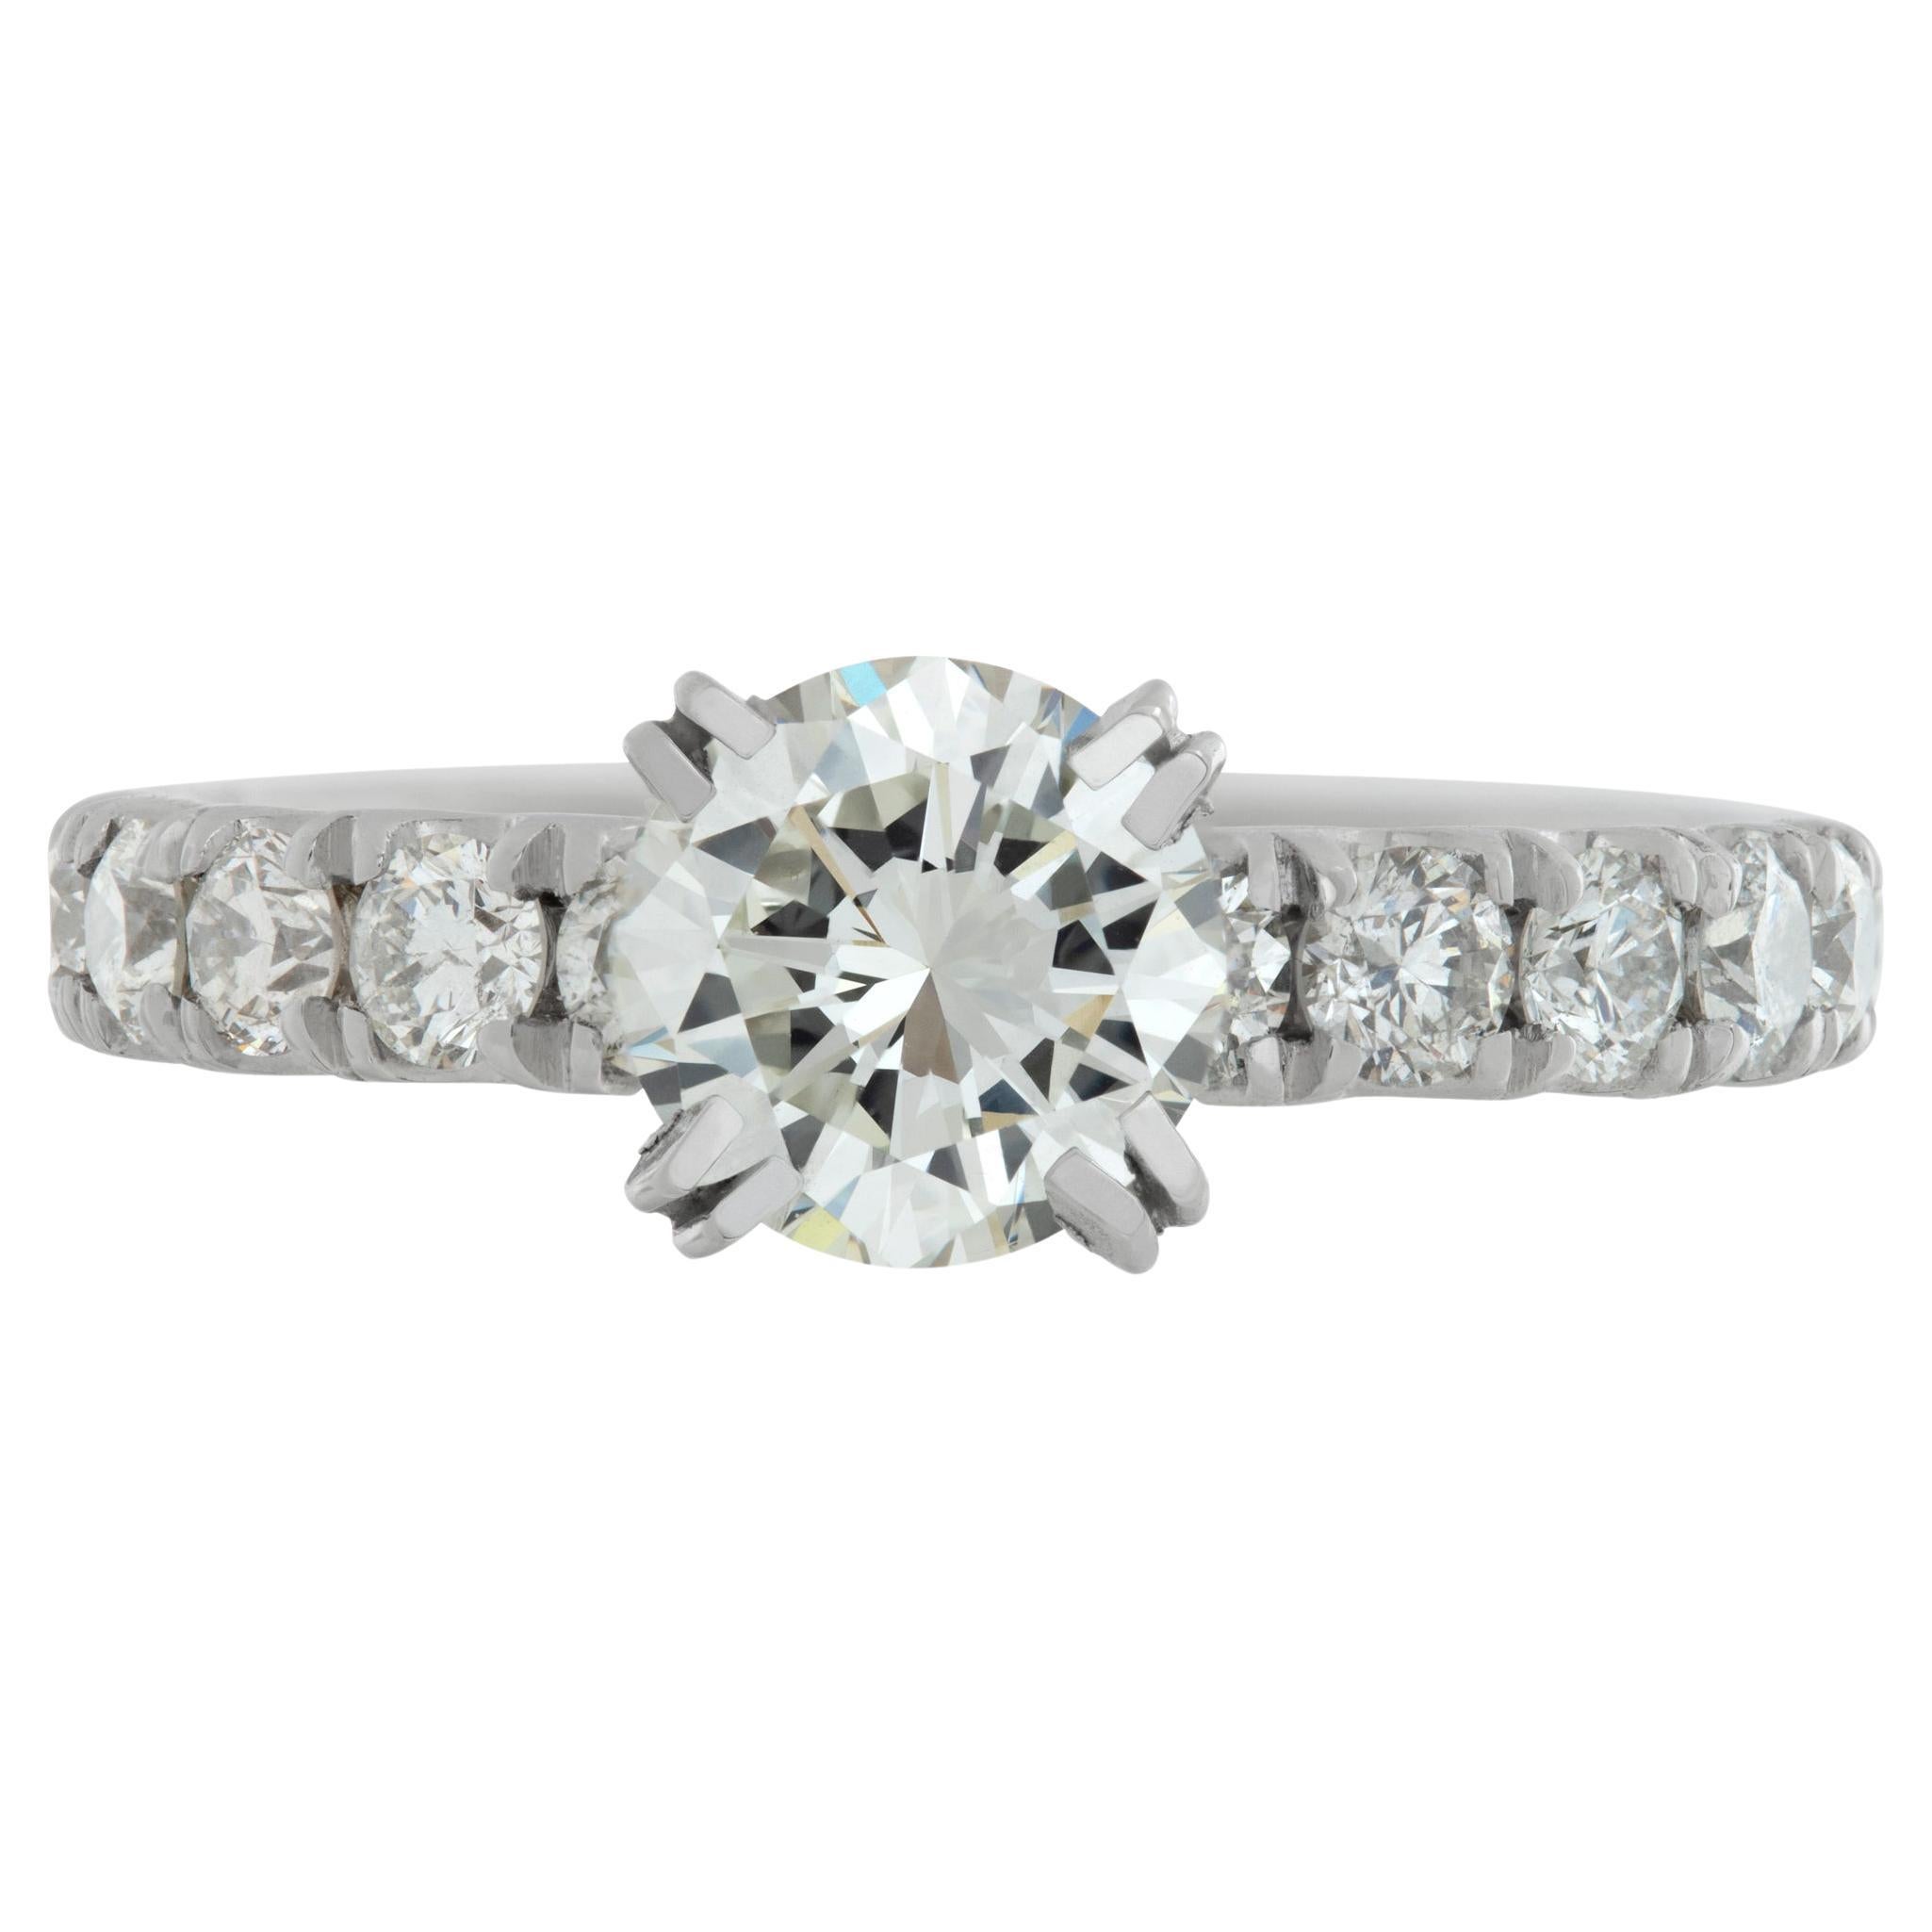 Platinum GIA certified round brilliant cut diamond ring For Sale